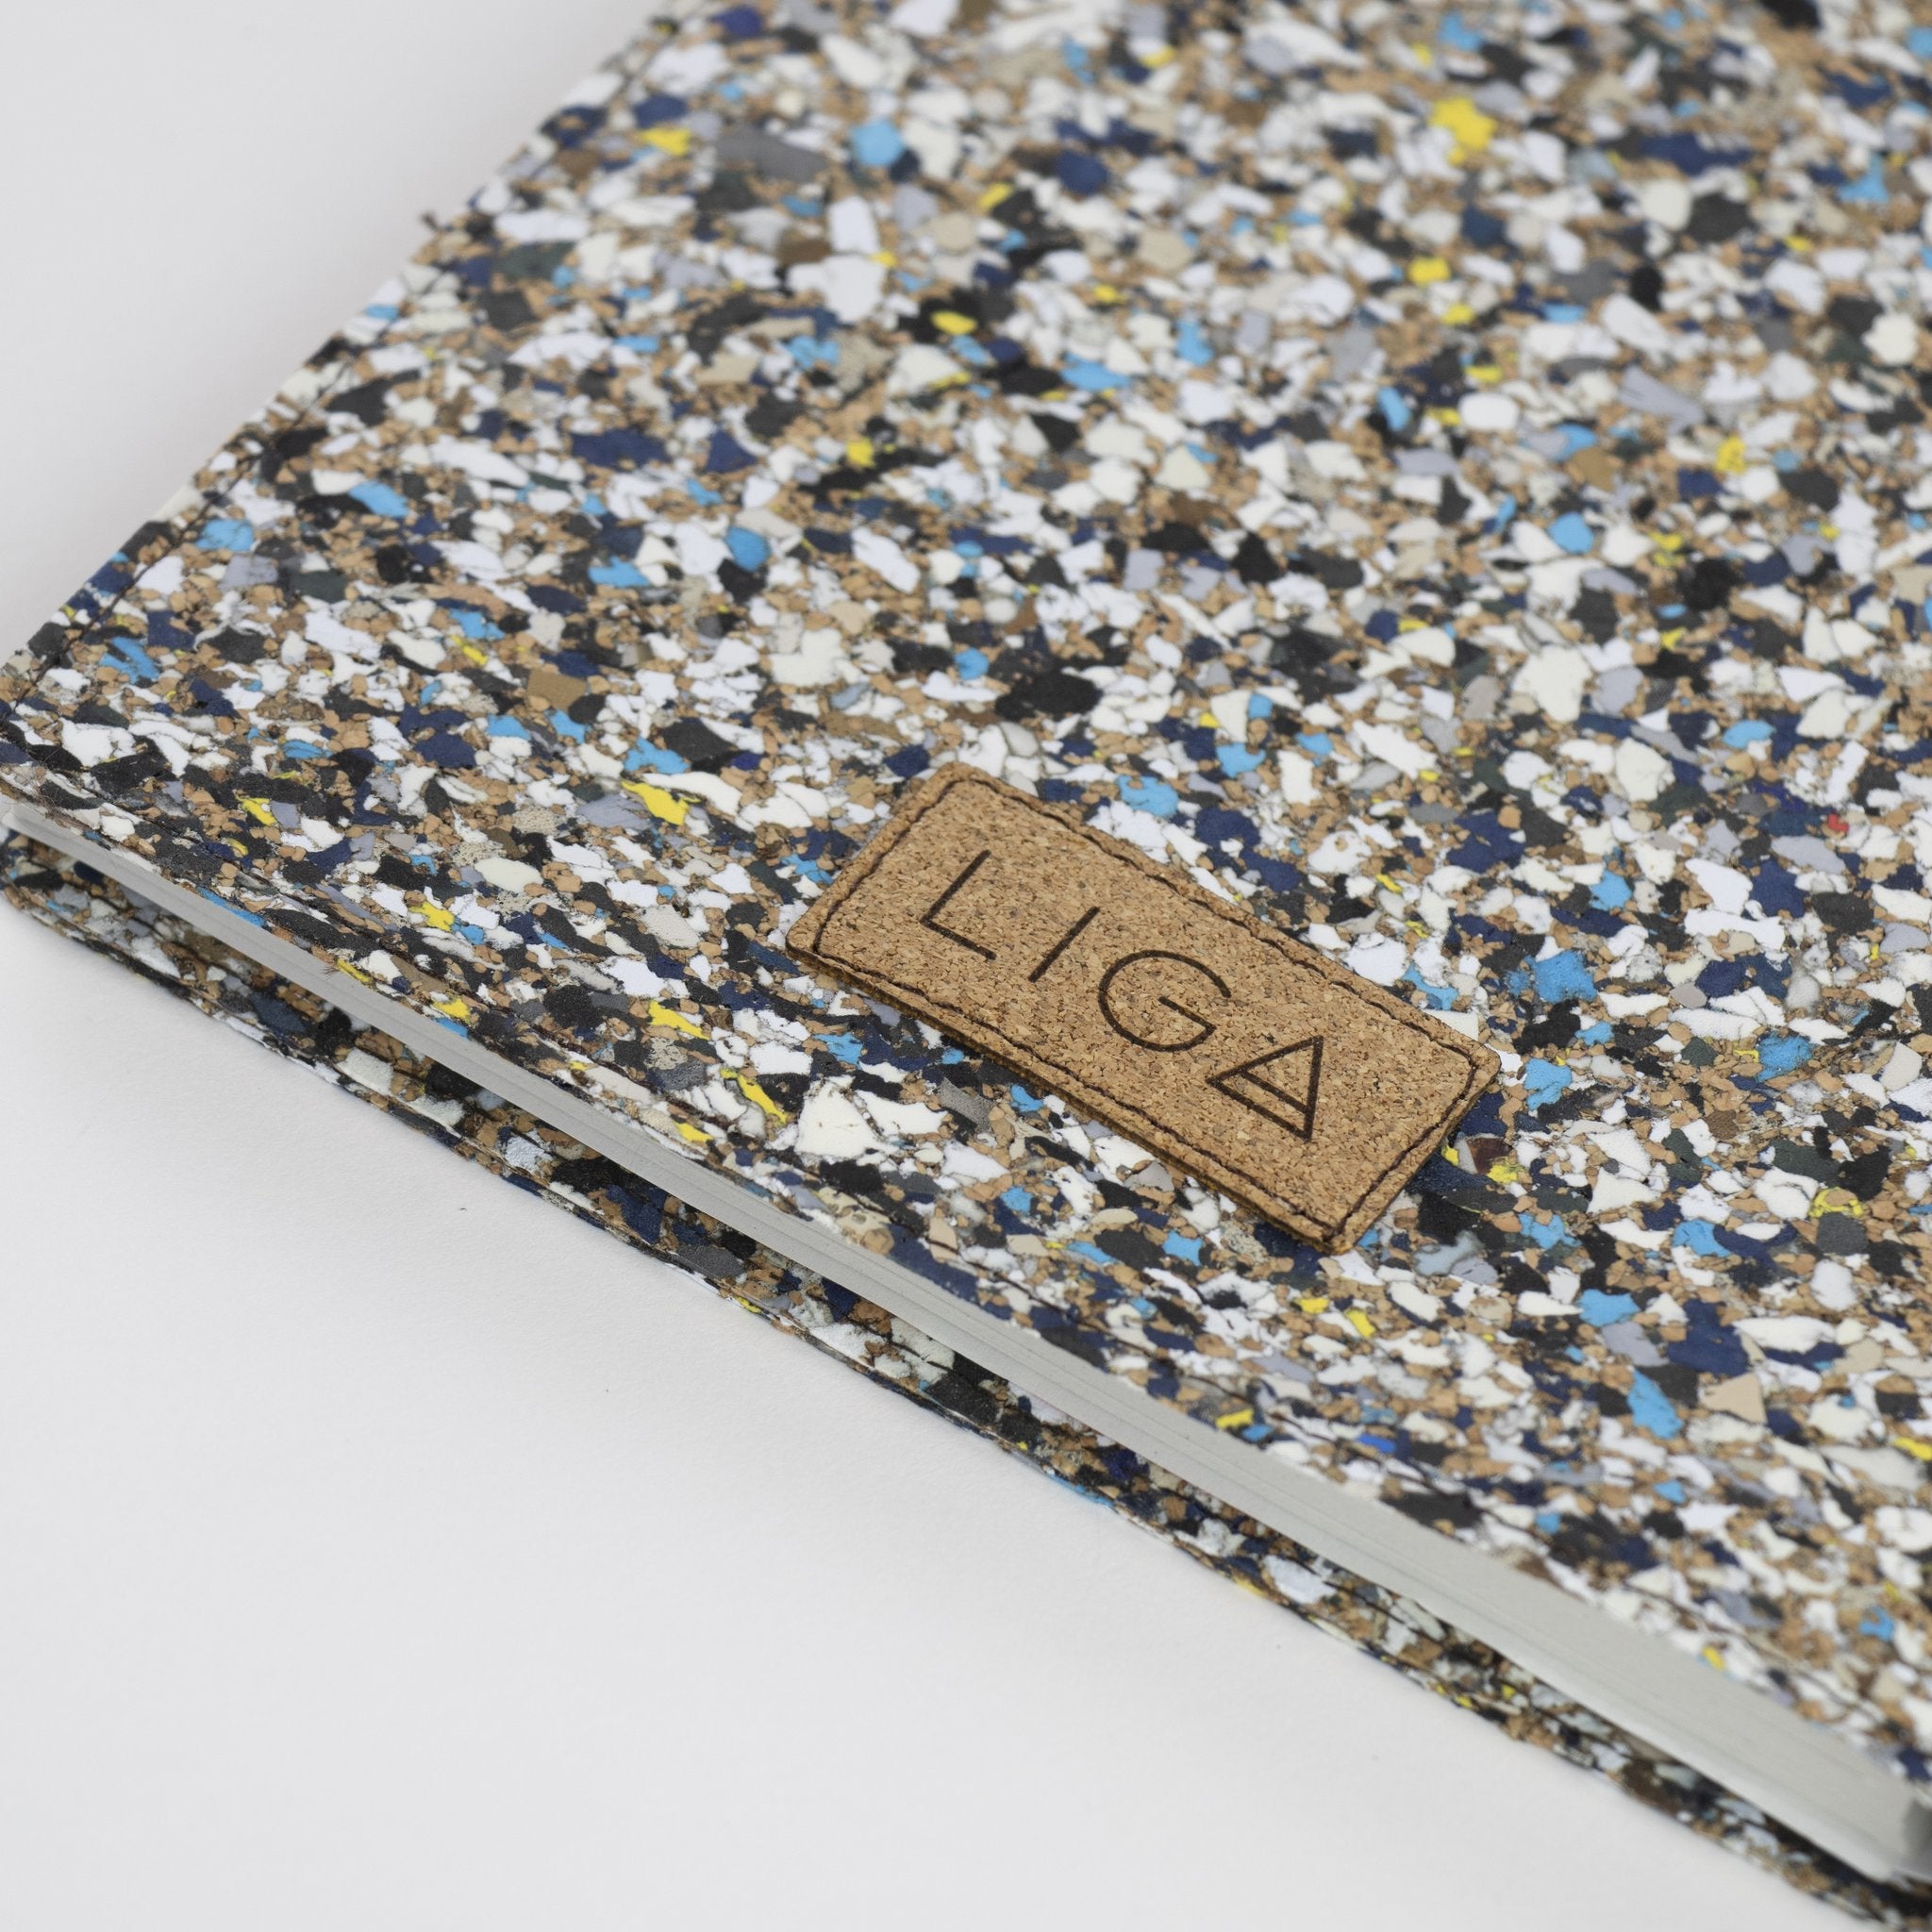 Close up of the Liga brand label